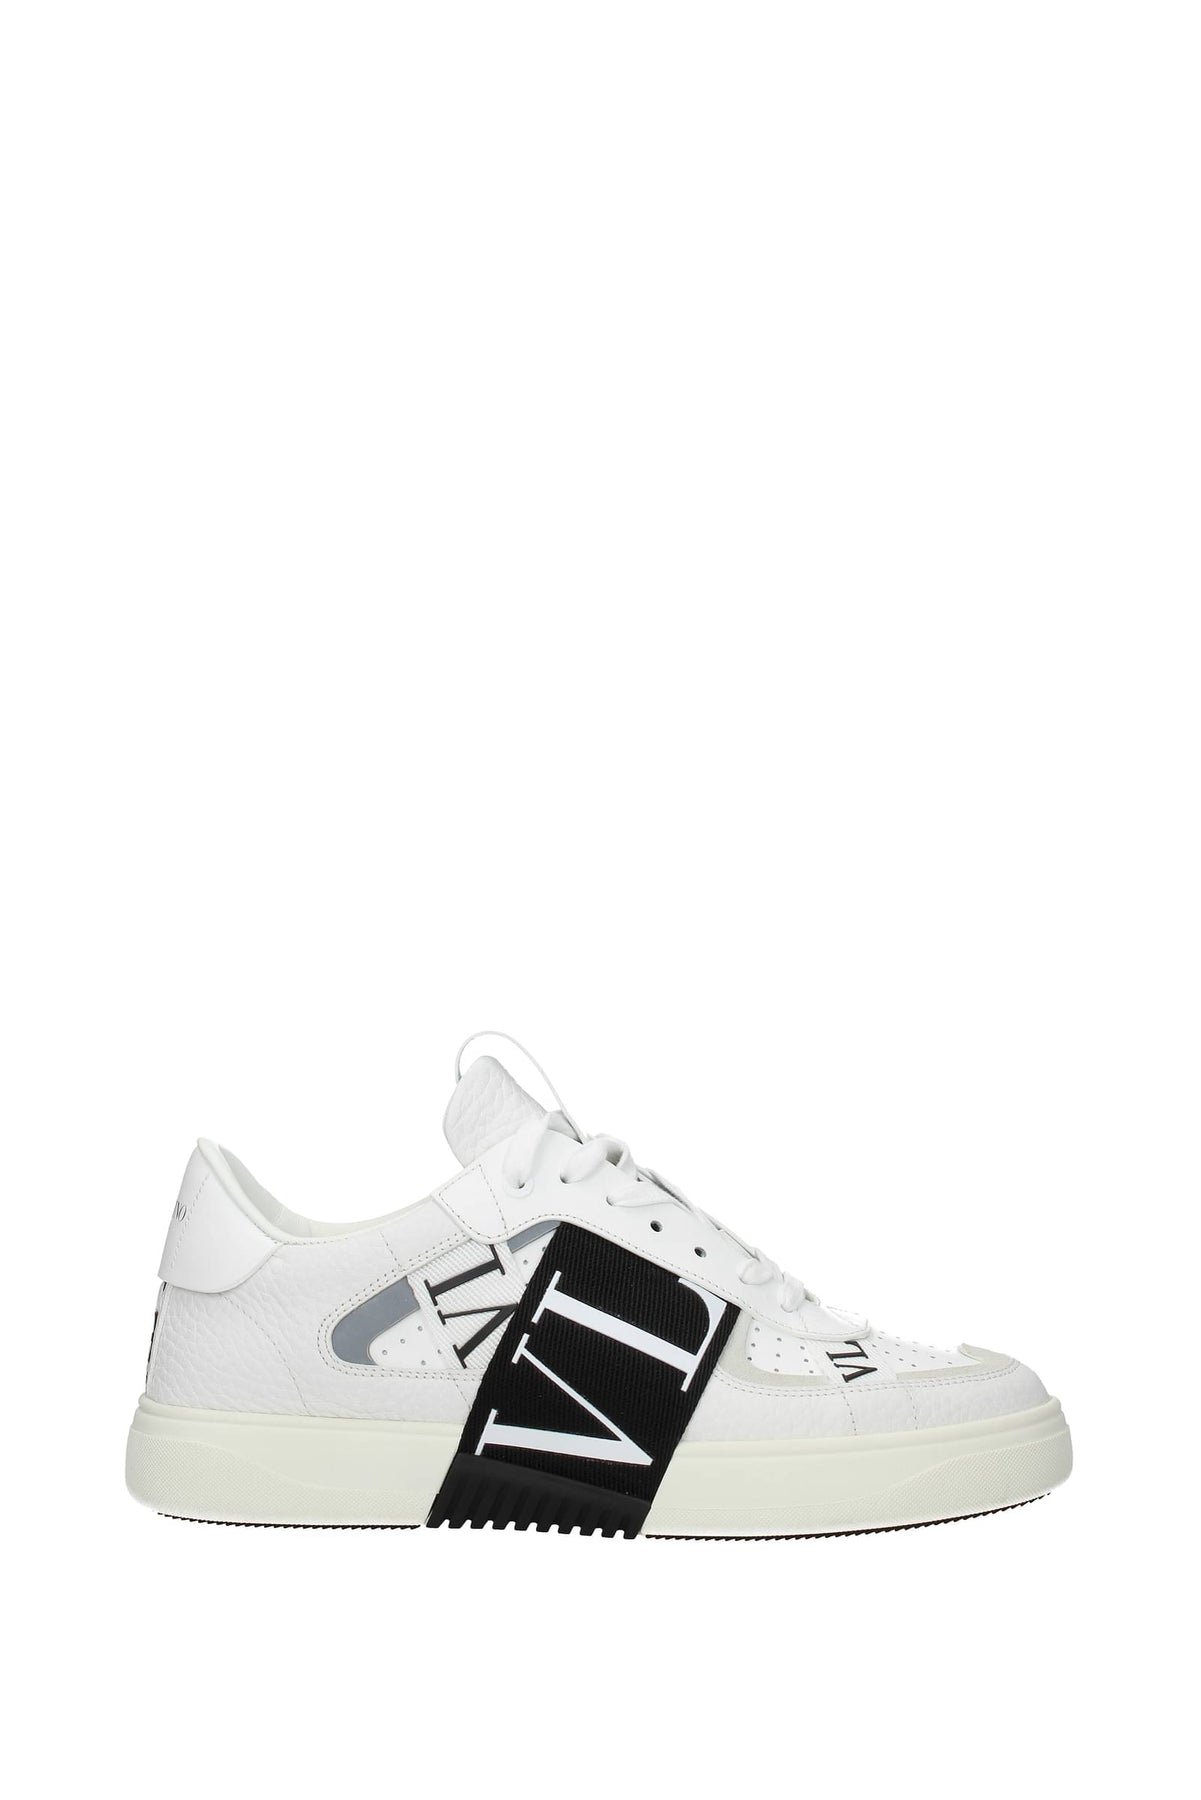 Valentino Garavani Sneakers Leather Black In White